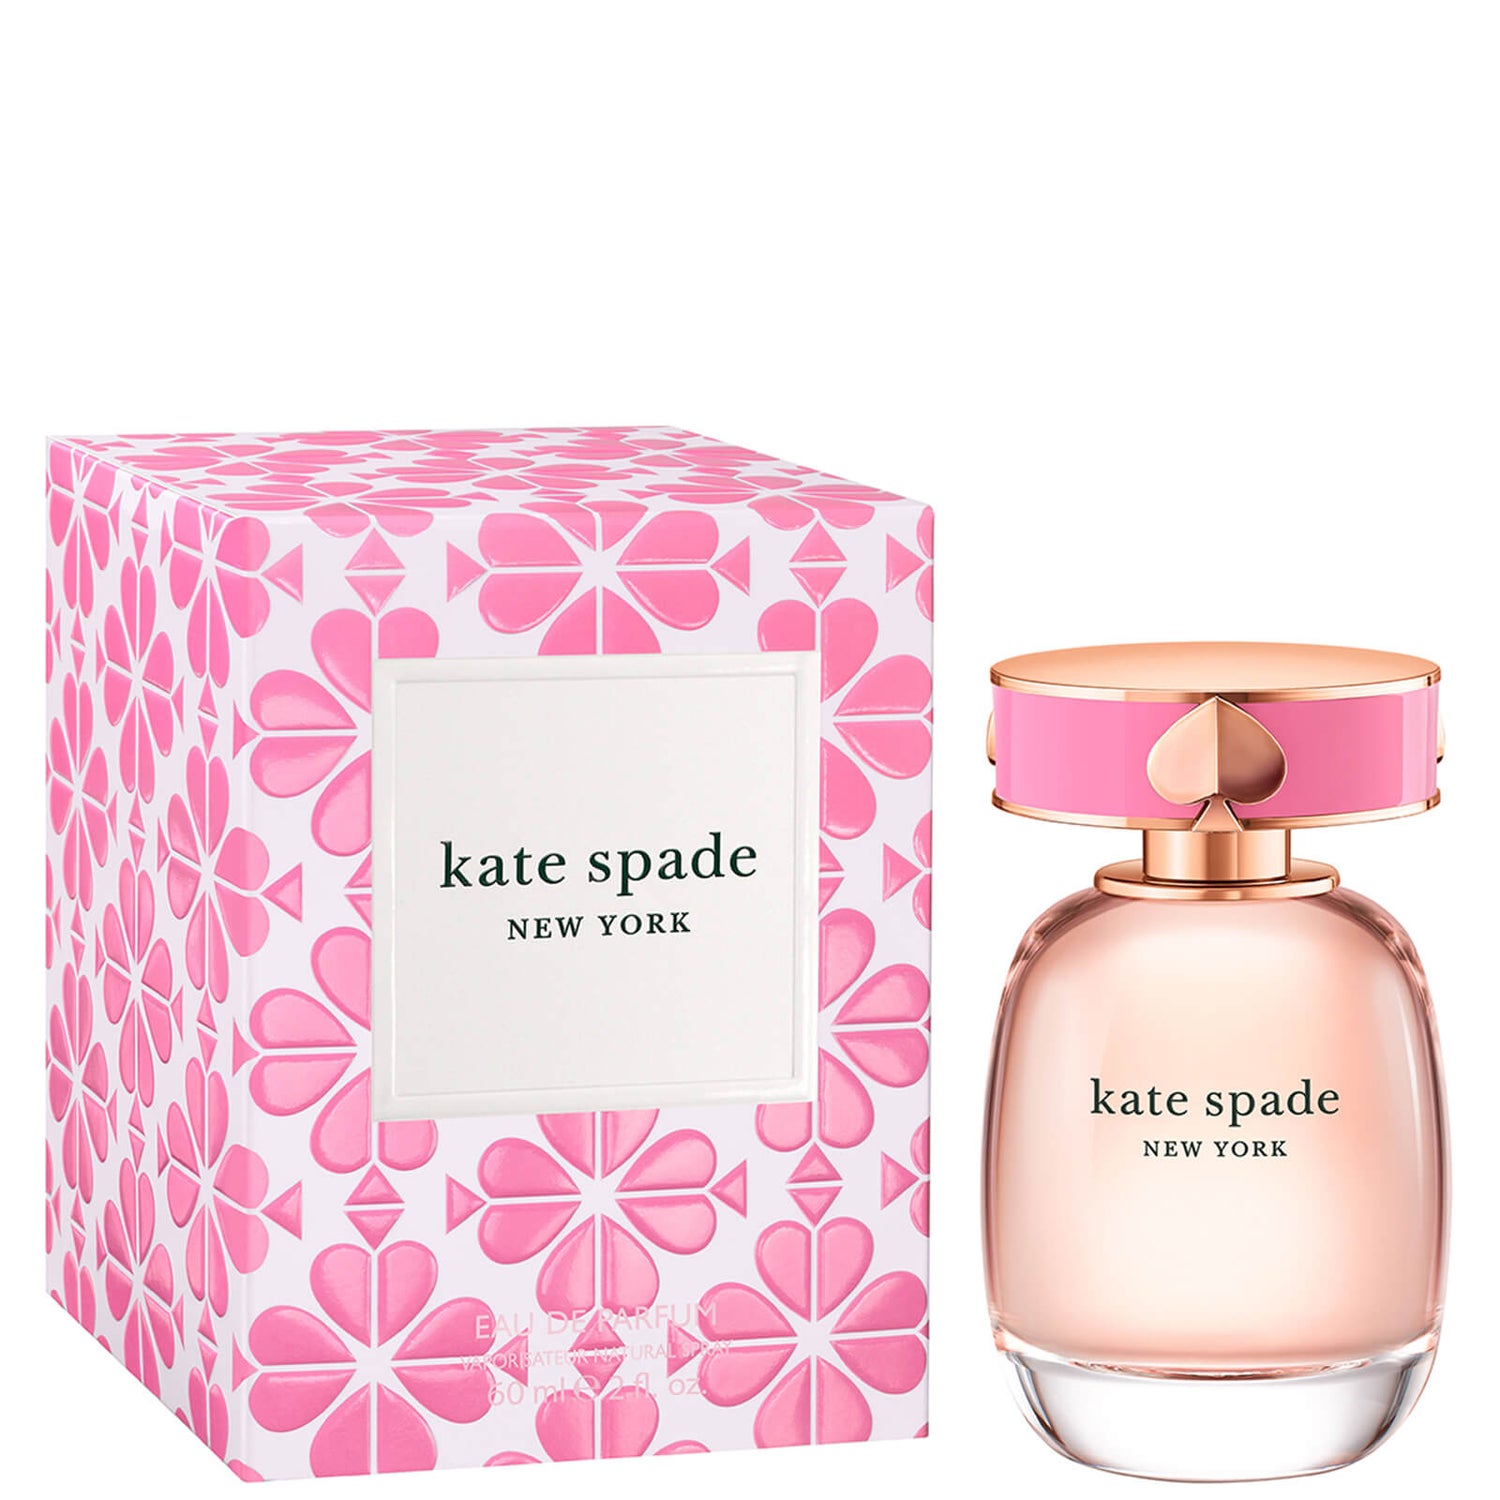 Kate Spade New York Eau de Parfum 60ml | LOOKFANTASTIC AU